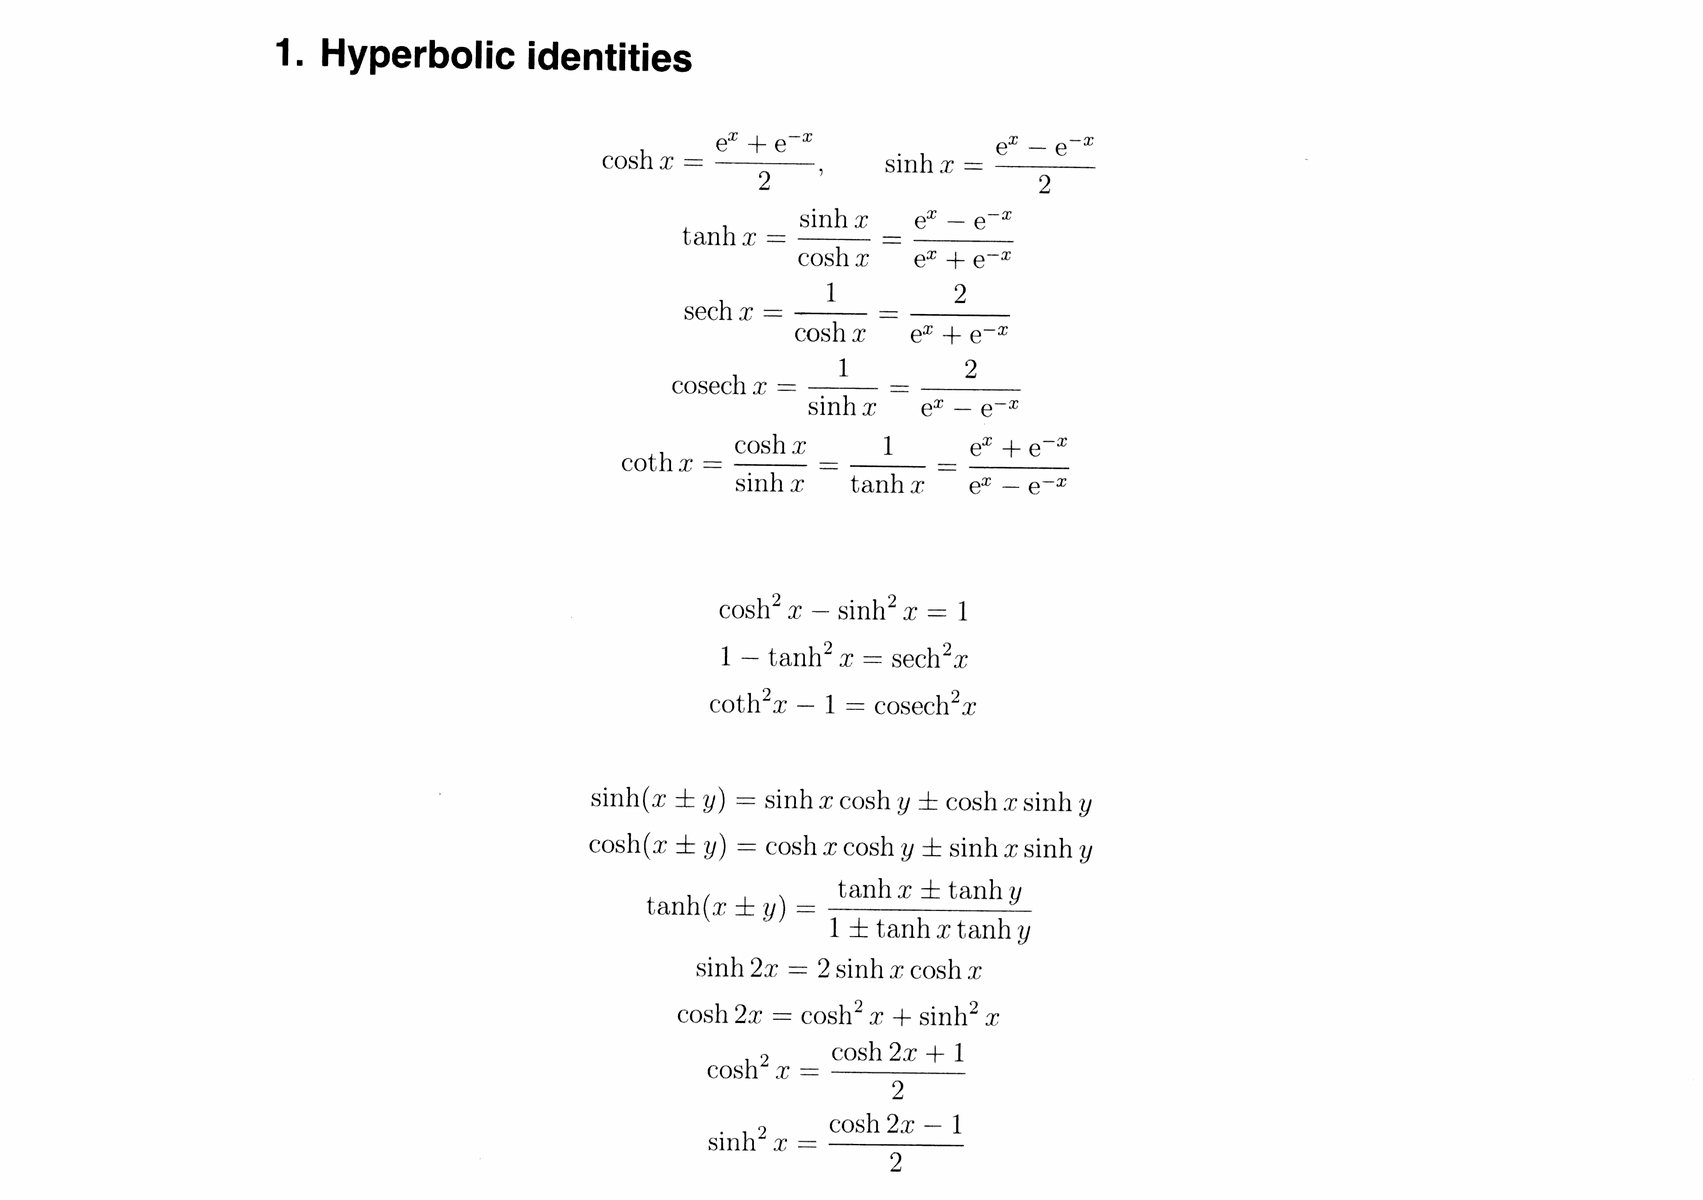 Table of hyperbolic identities